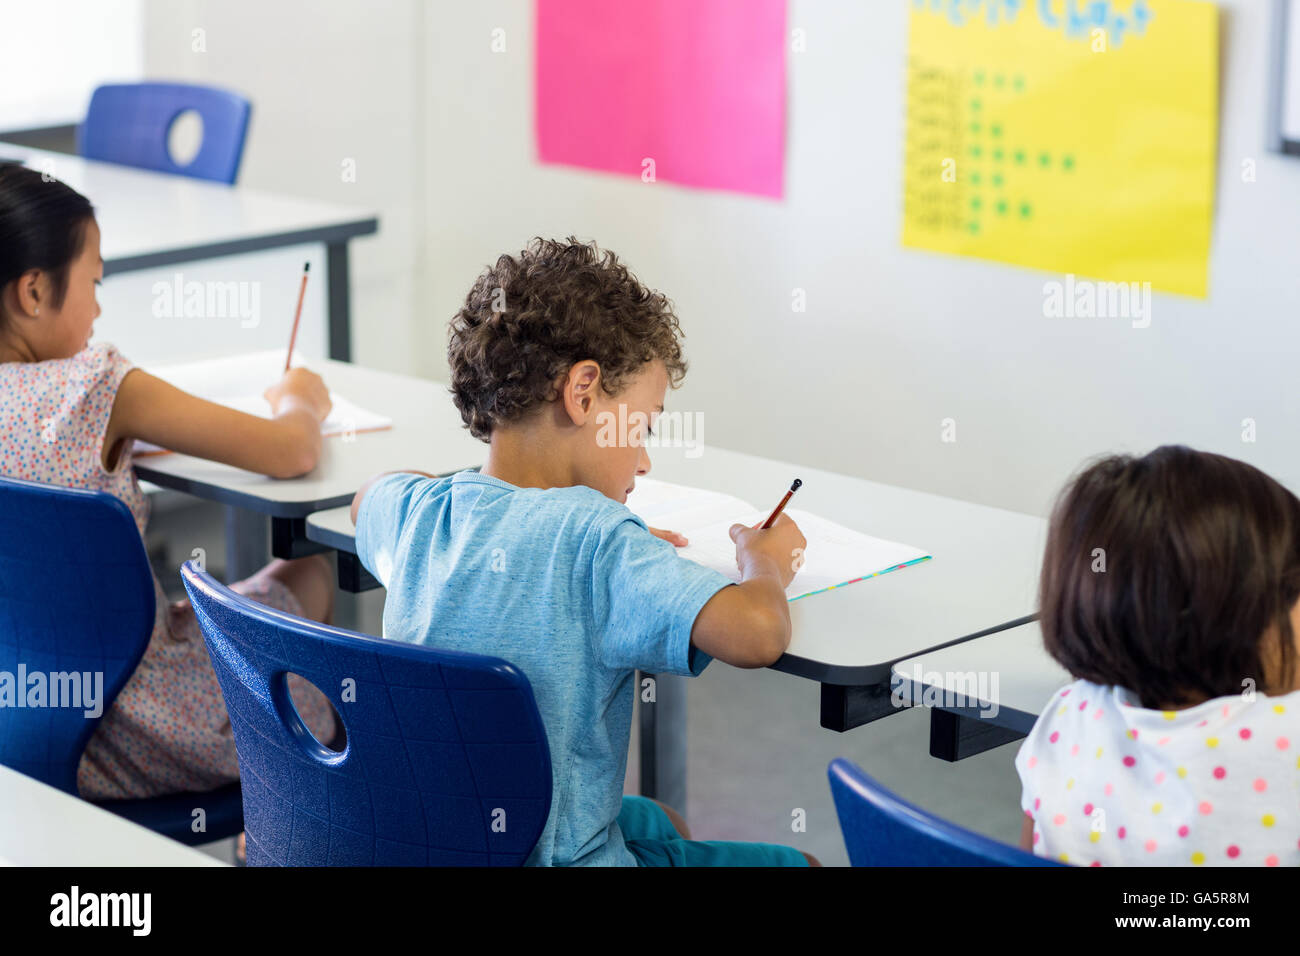 Schoolchildren writing on book in classroom Stock Photo